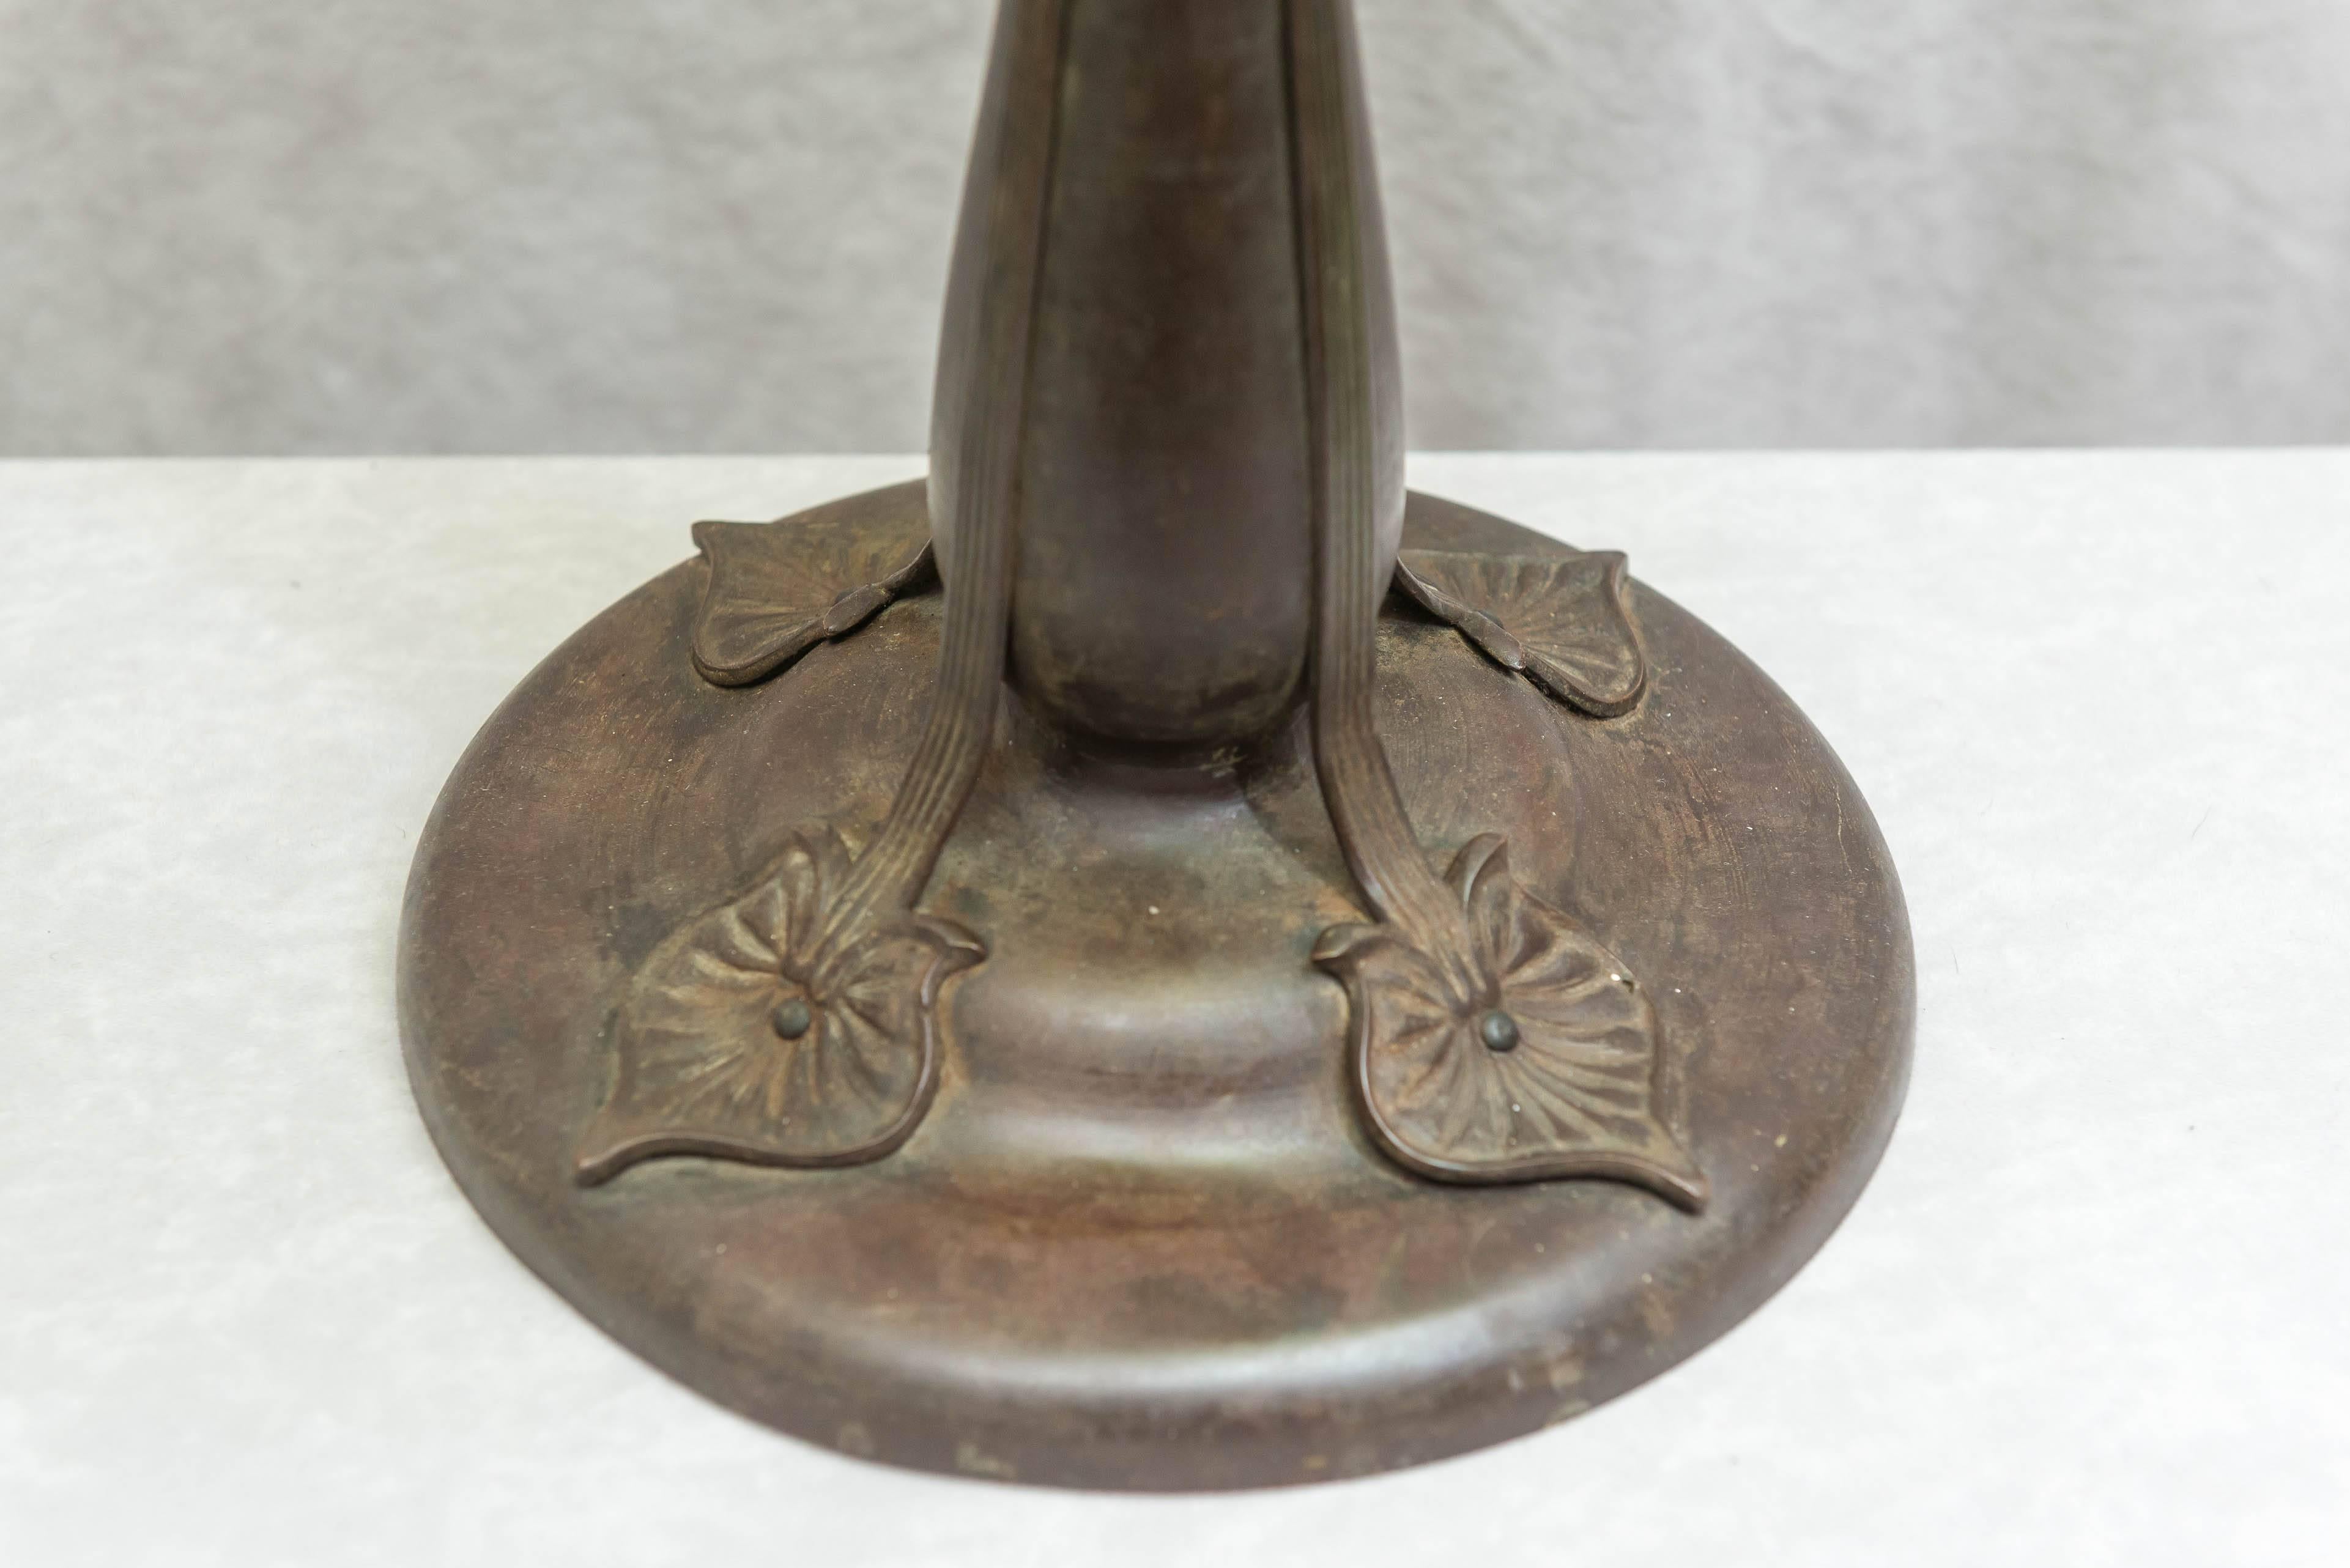 20th Century Austrian Art Nouveau Table Lamp with Handblown Shade